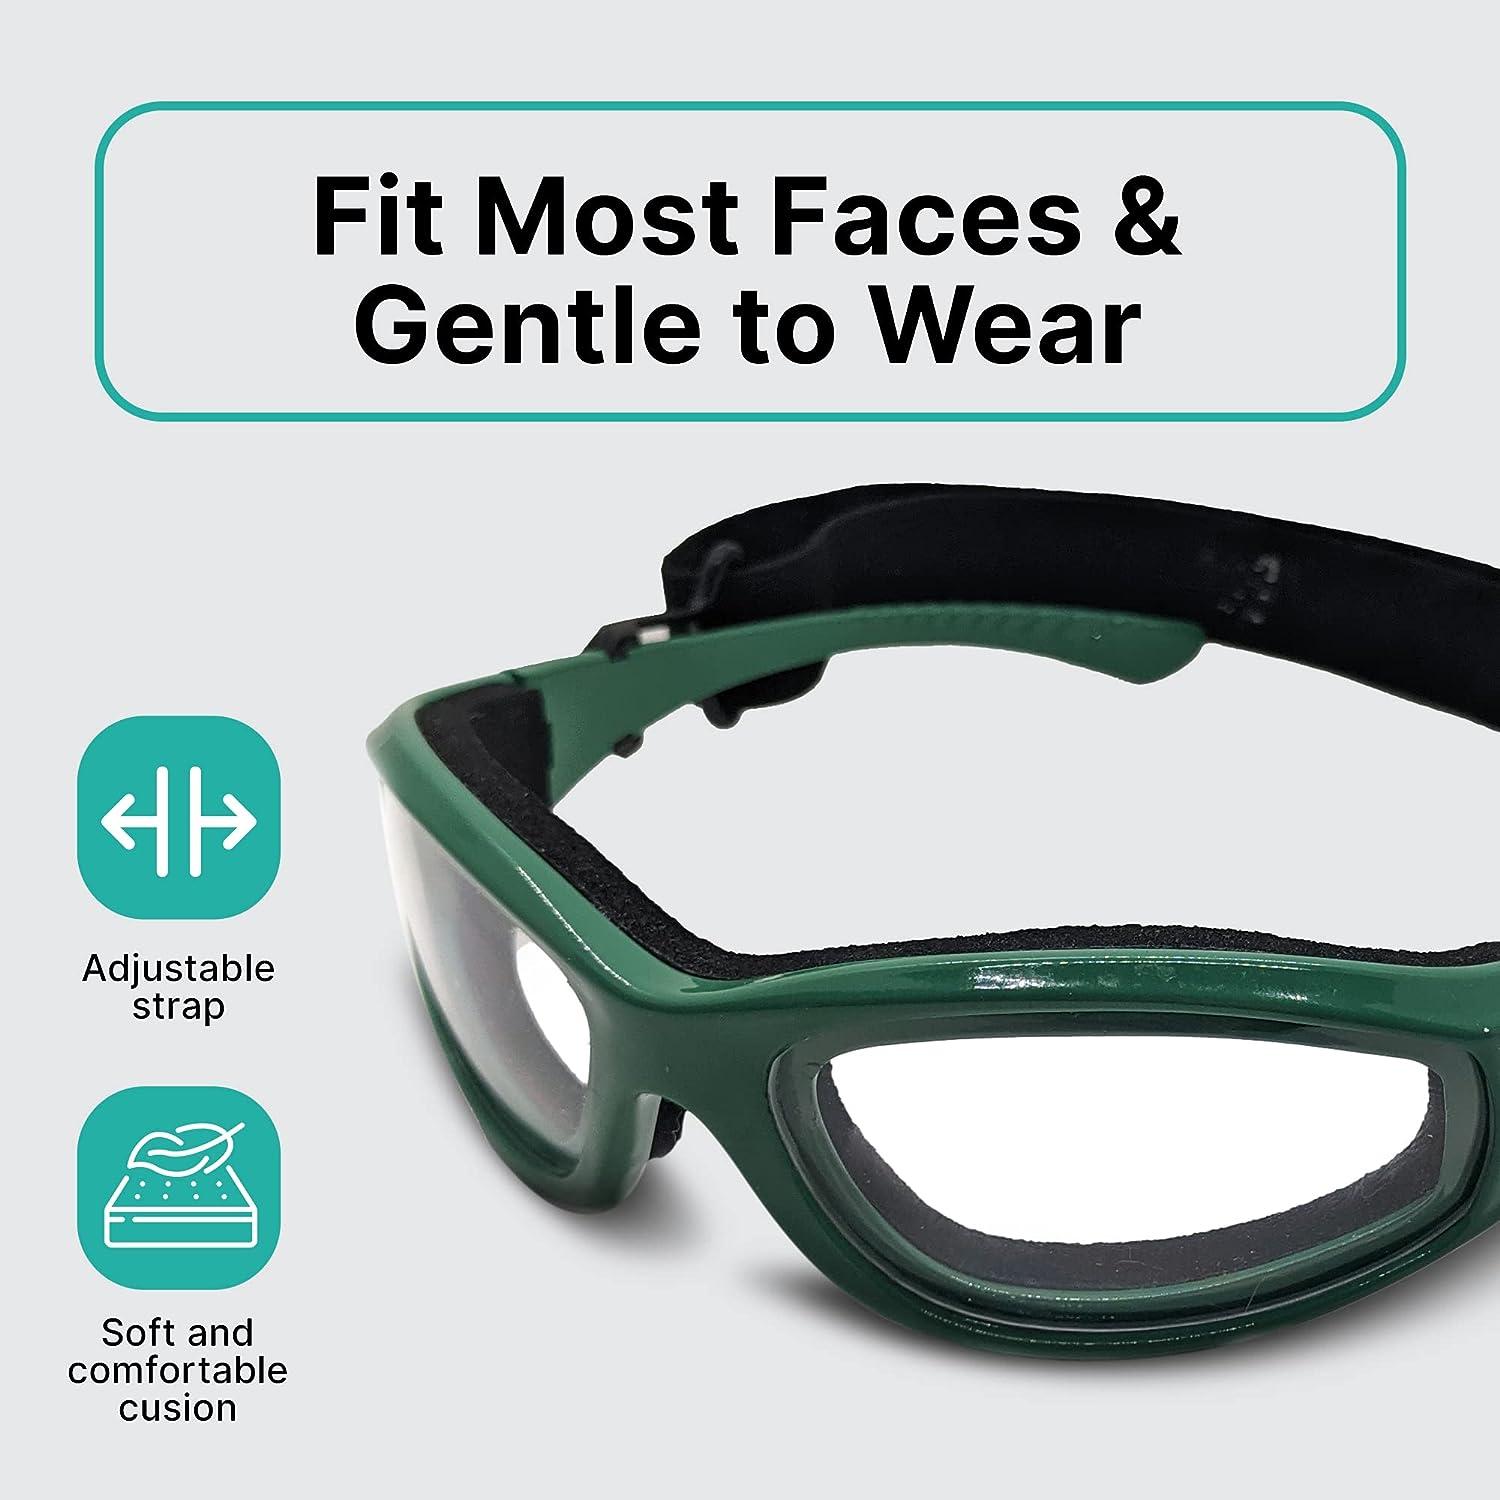 Kitchen Onion Goggles Anti-Tear Cutting Chopping Eye Protects Glasses  Eyewear AU